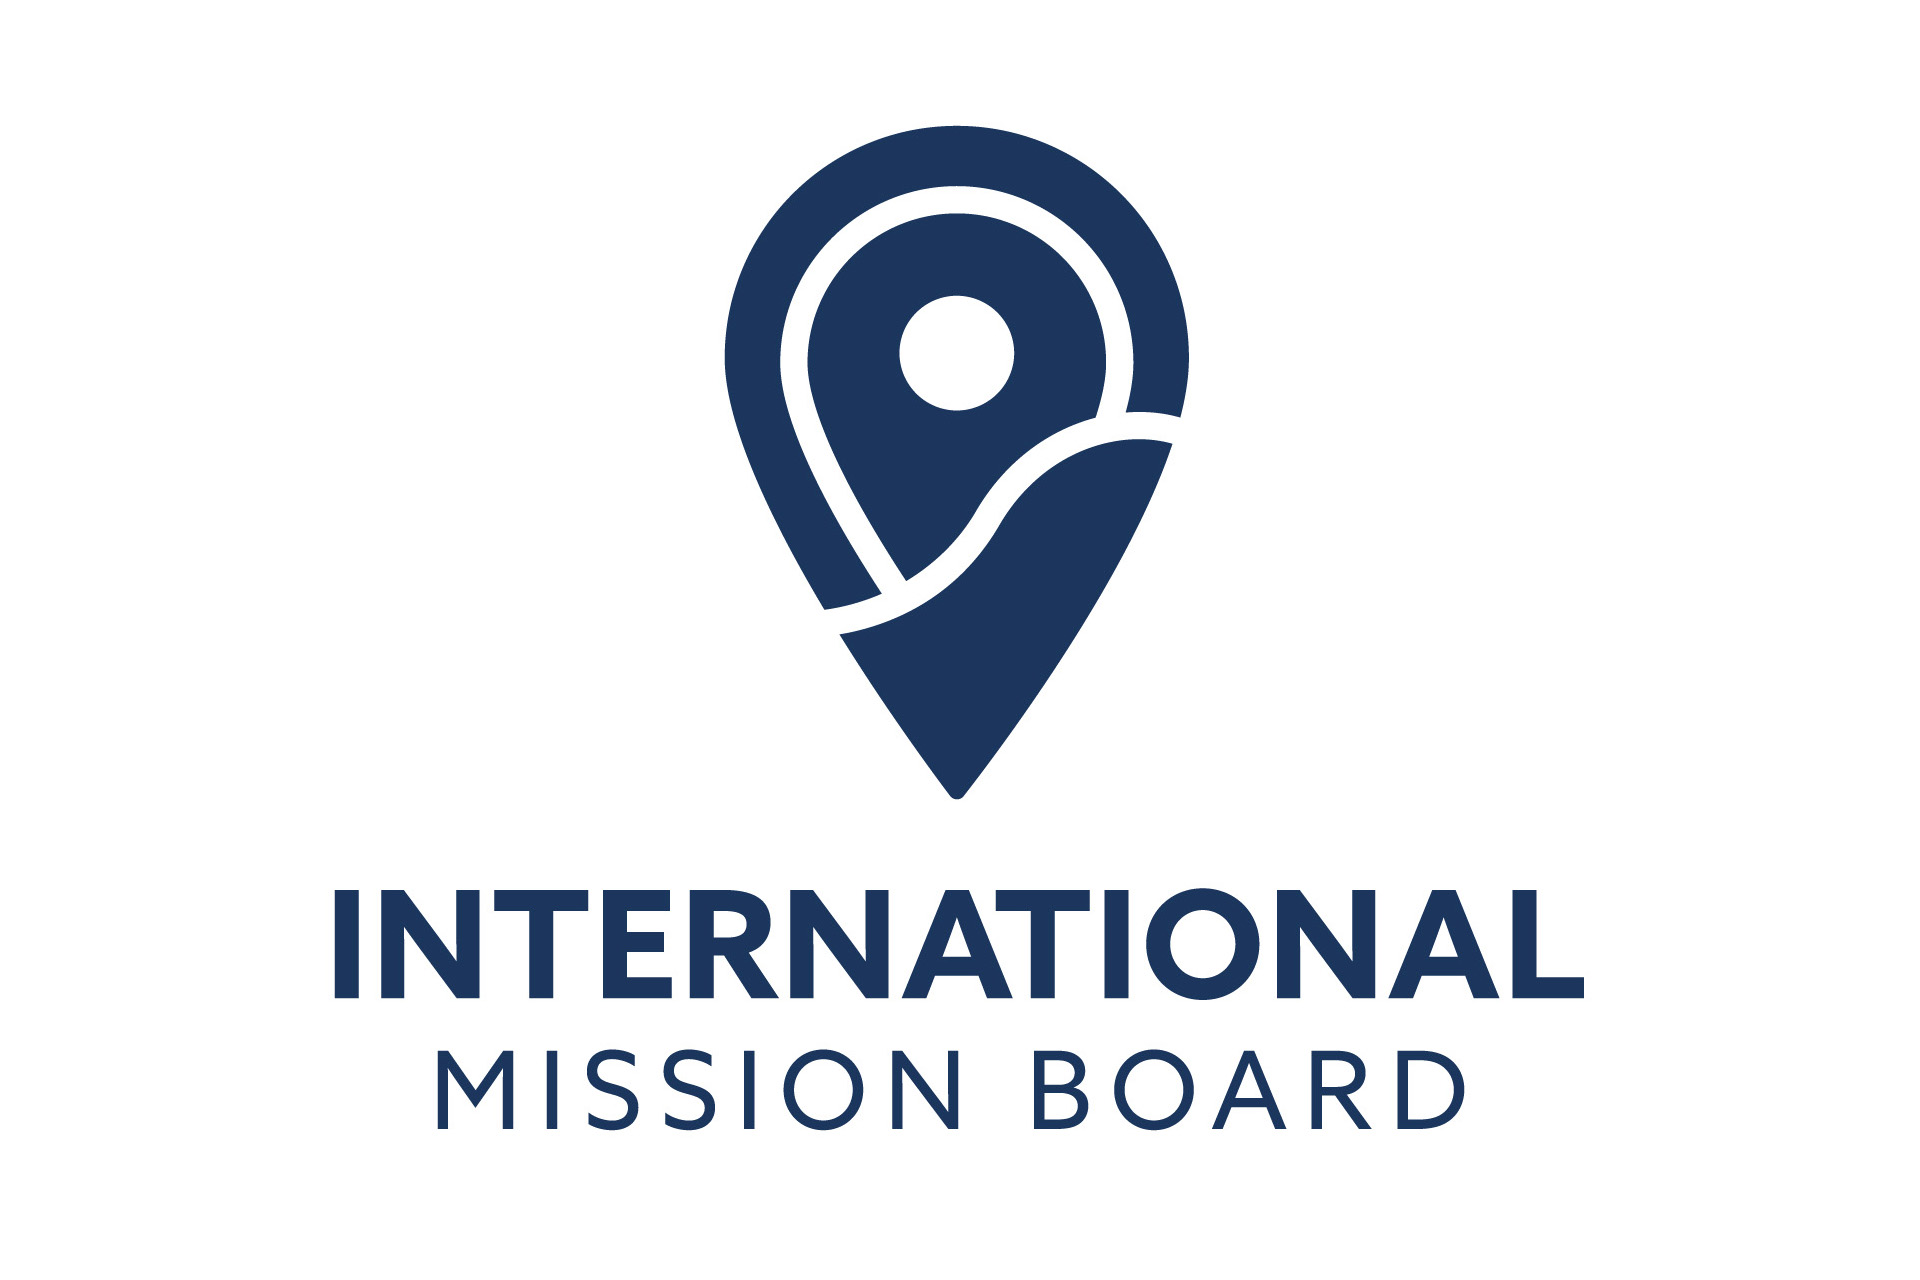 International Mission Board